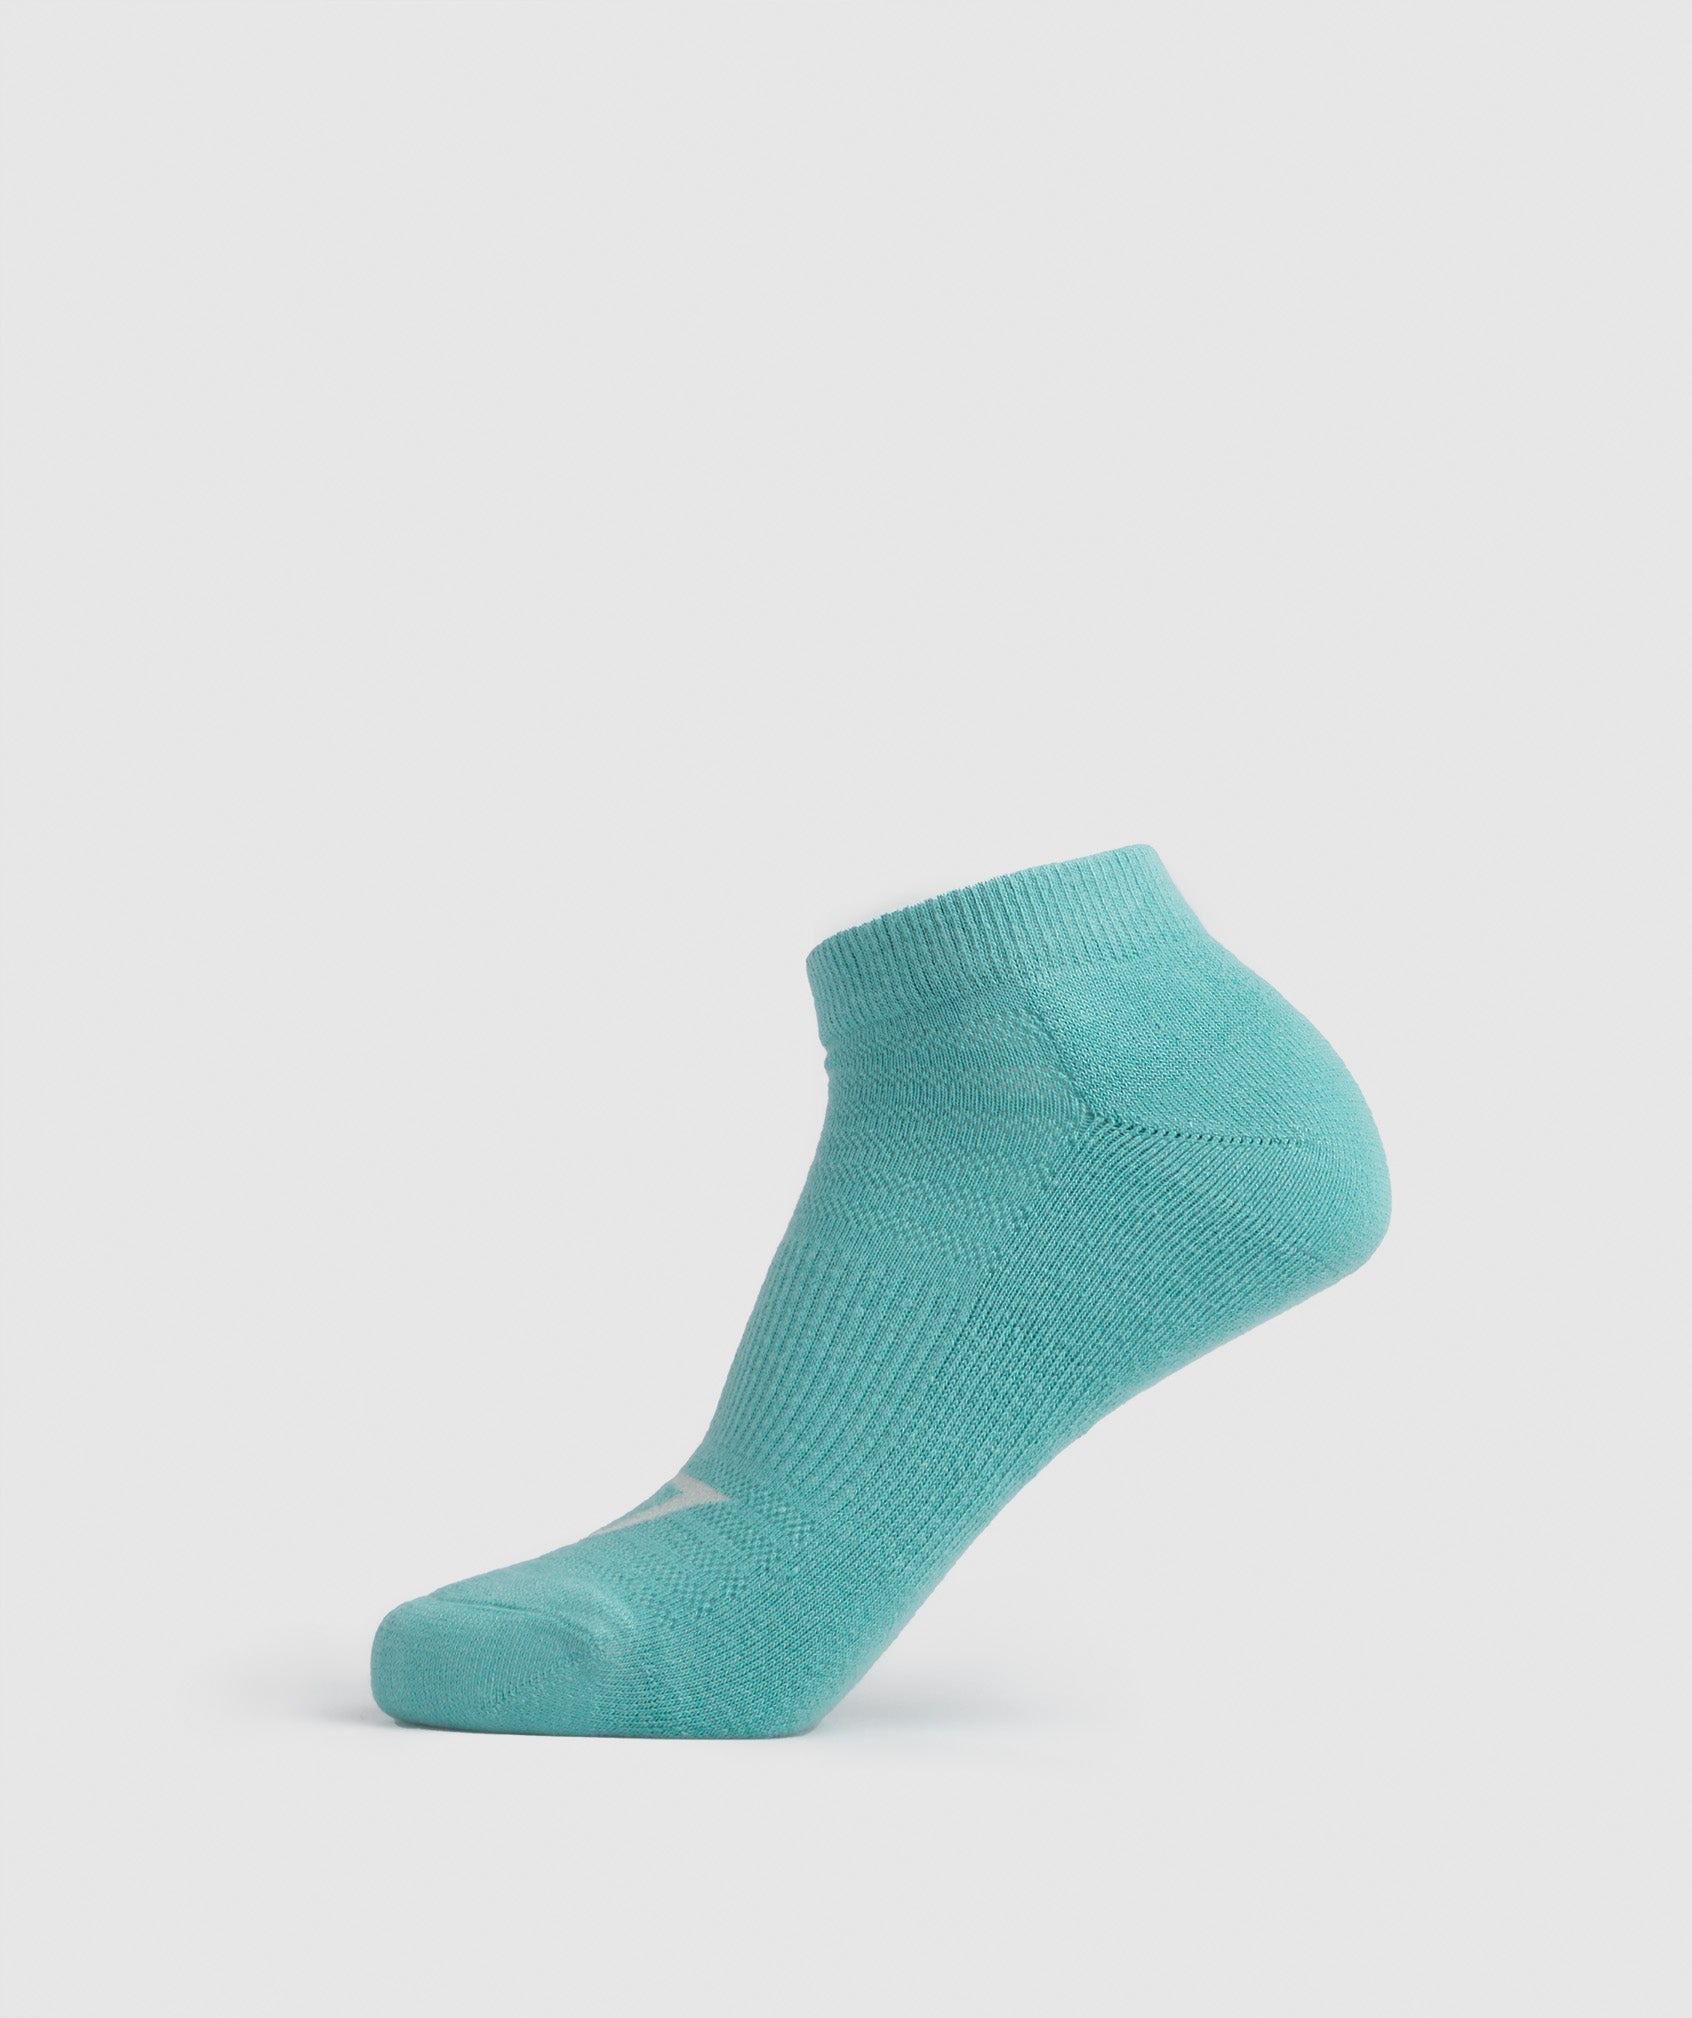 Trainer Socks 3pk in Blue/Jewel Green/Pebble Grey - view 4